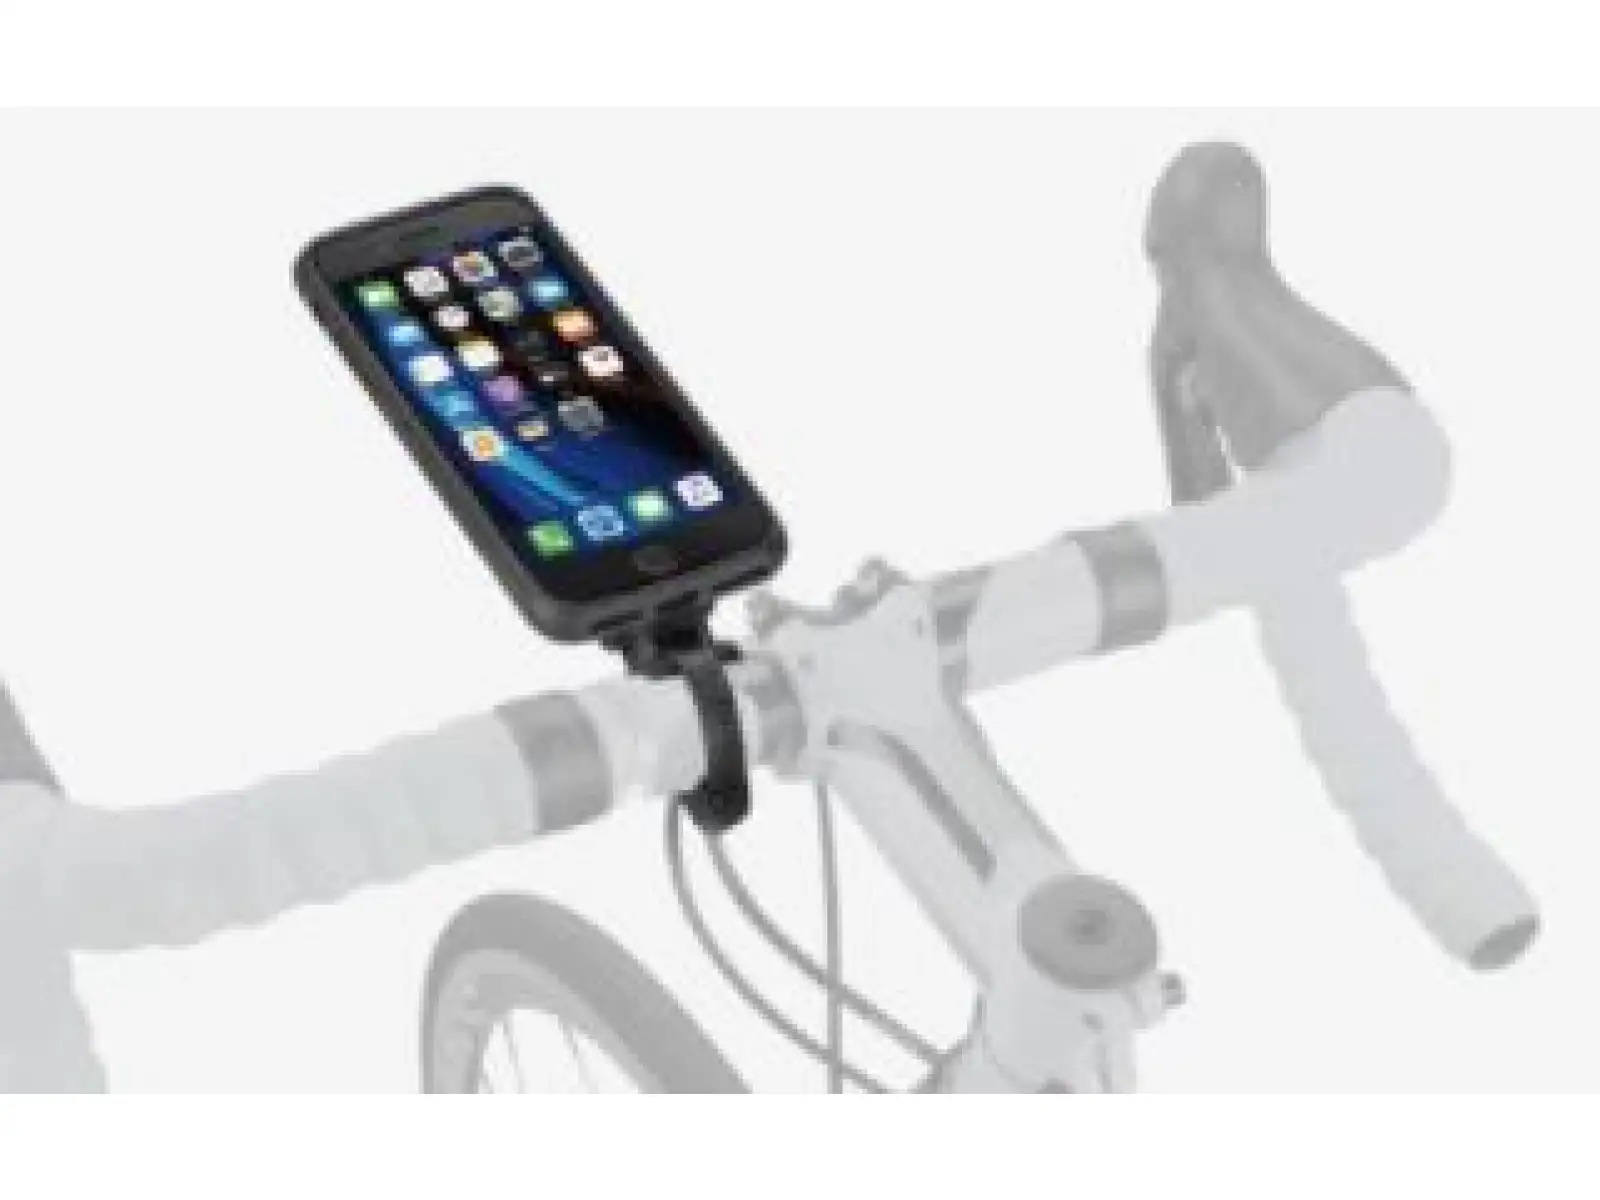 Topeak Ridecase s držiakom pre iPhone 11 Pro Max